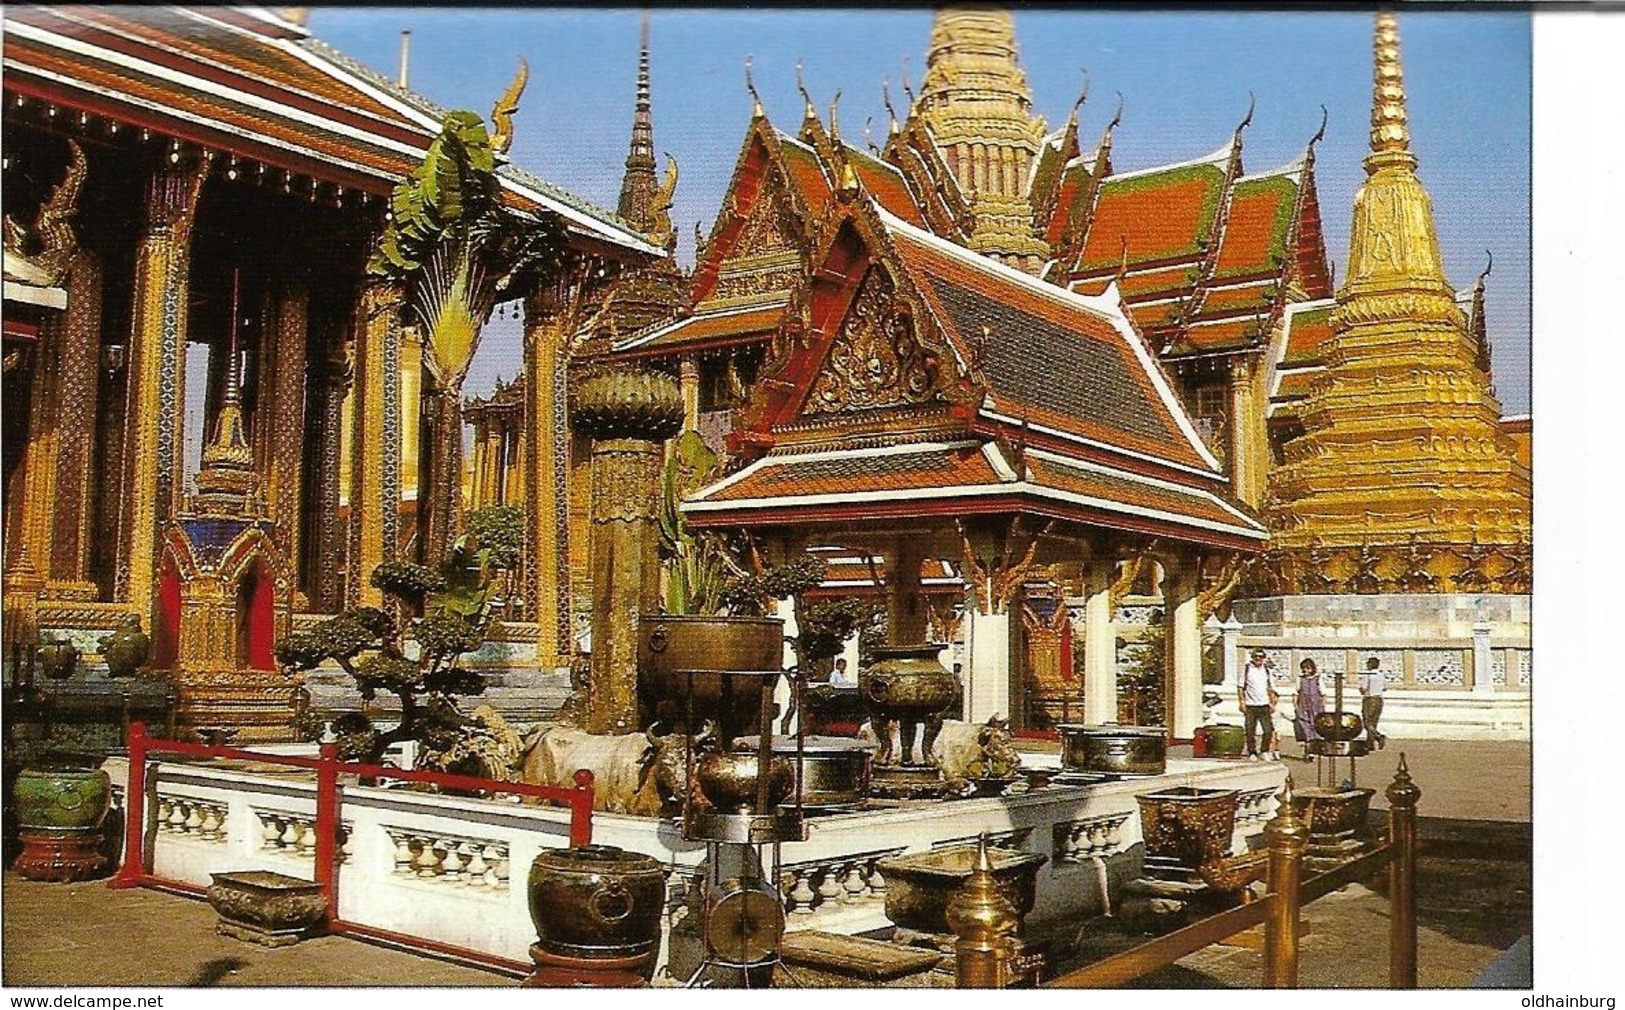 1689q: Postkartenfolder Grand Palace Emerald Buddha Temple Bangkok, 12 cards